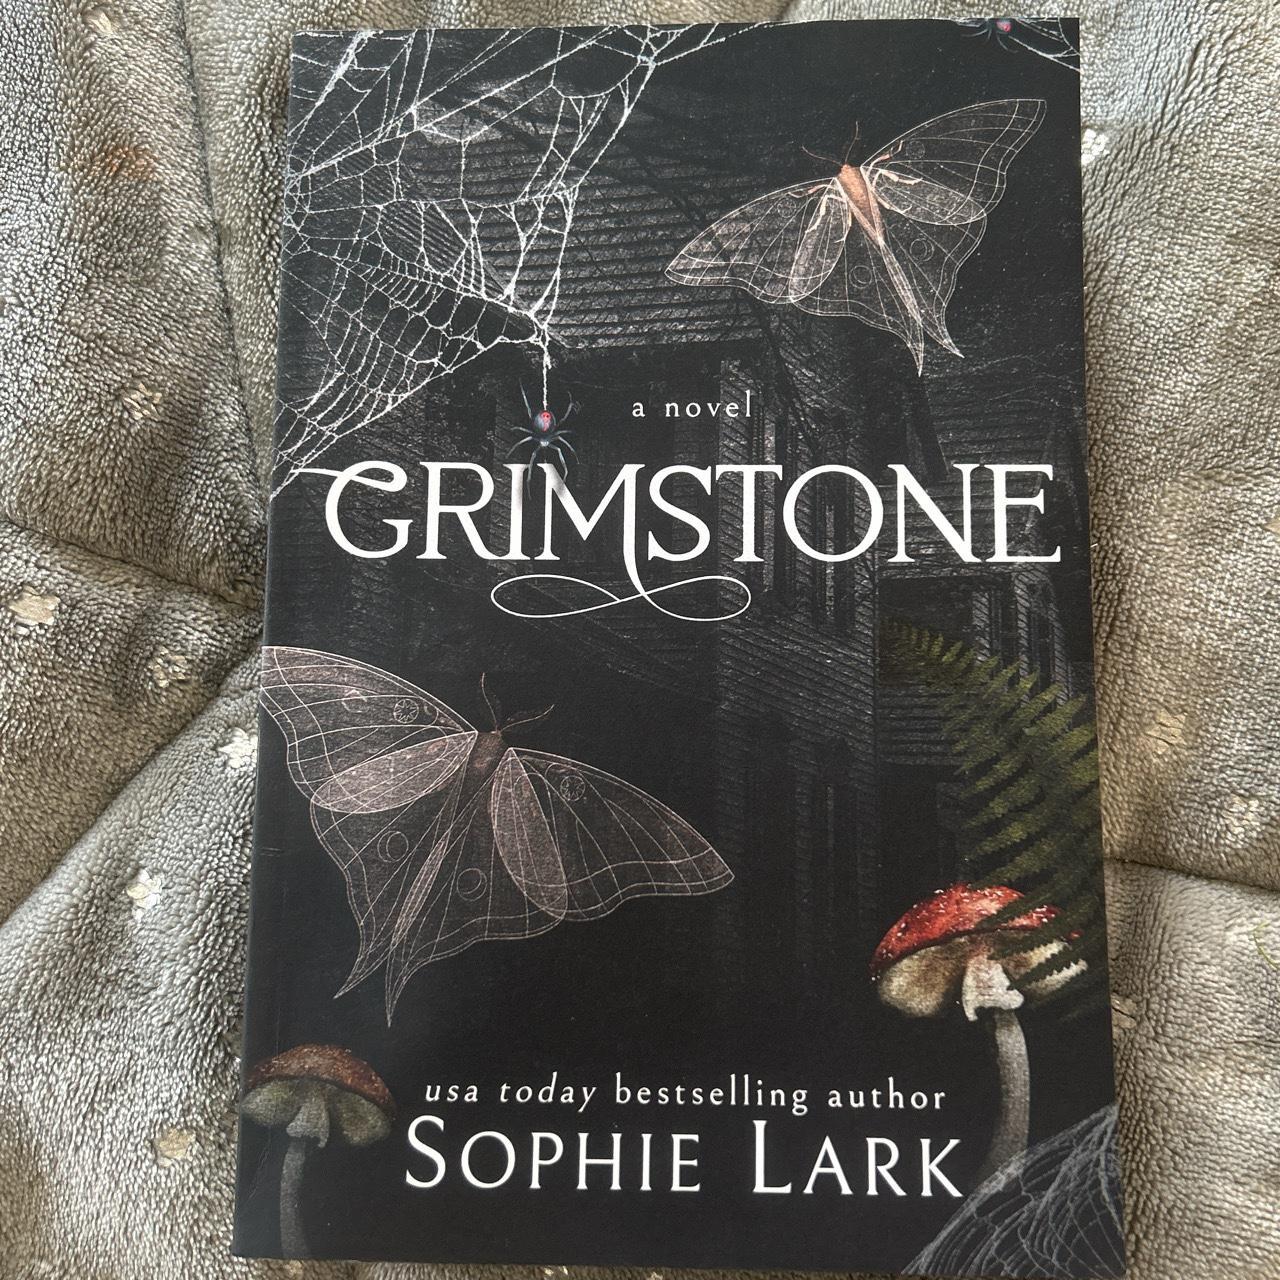 Grimstone by Sophie lark Has chapter illustrations - Depop